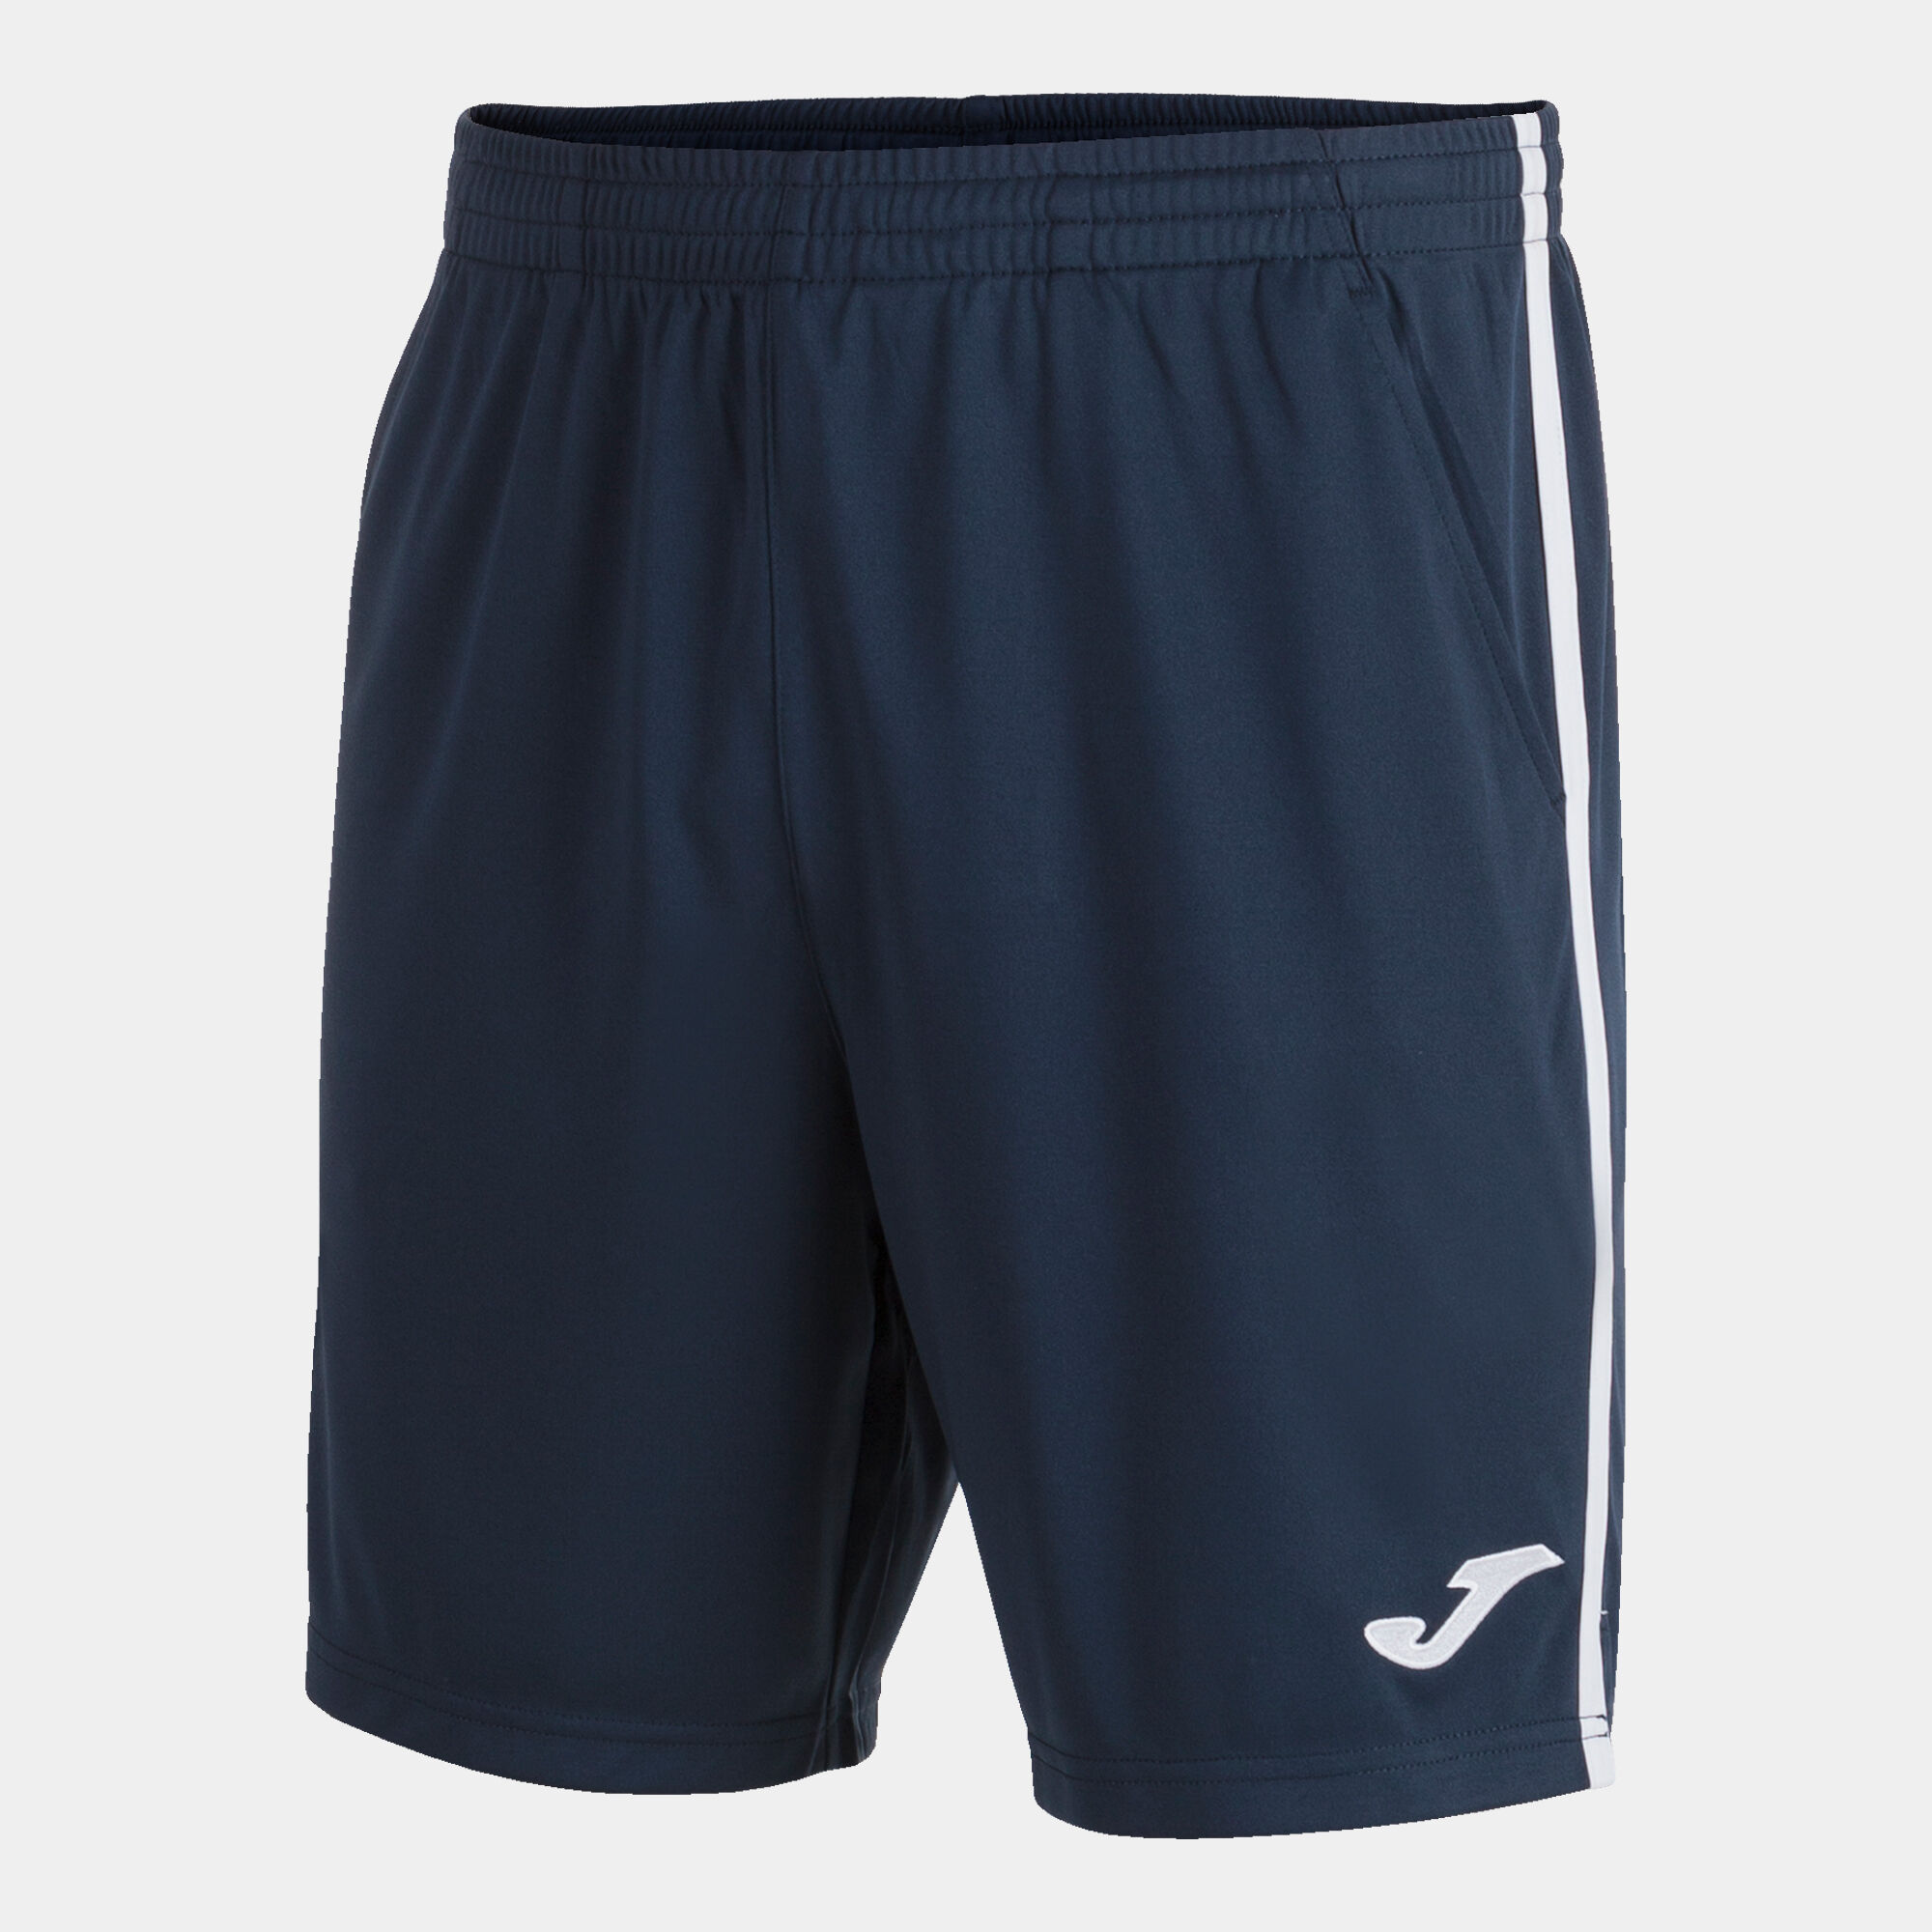 Bermuda shorts man Open III navy blue white